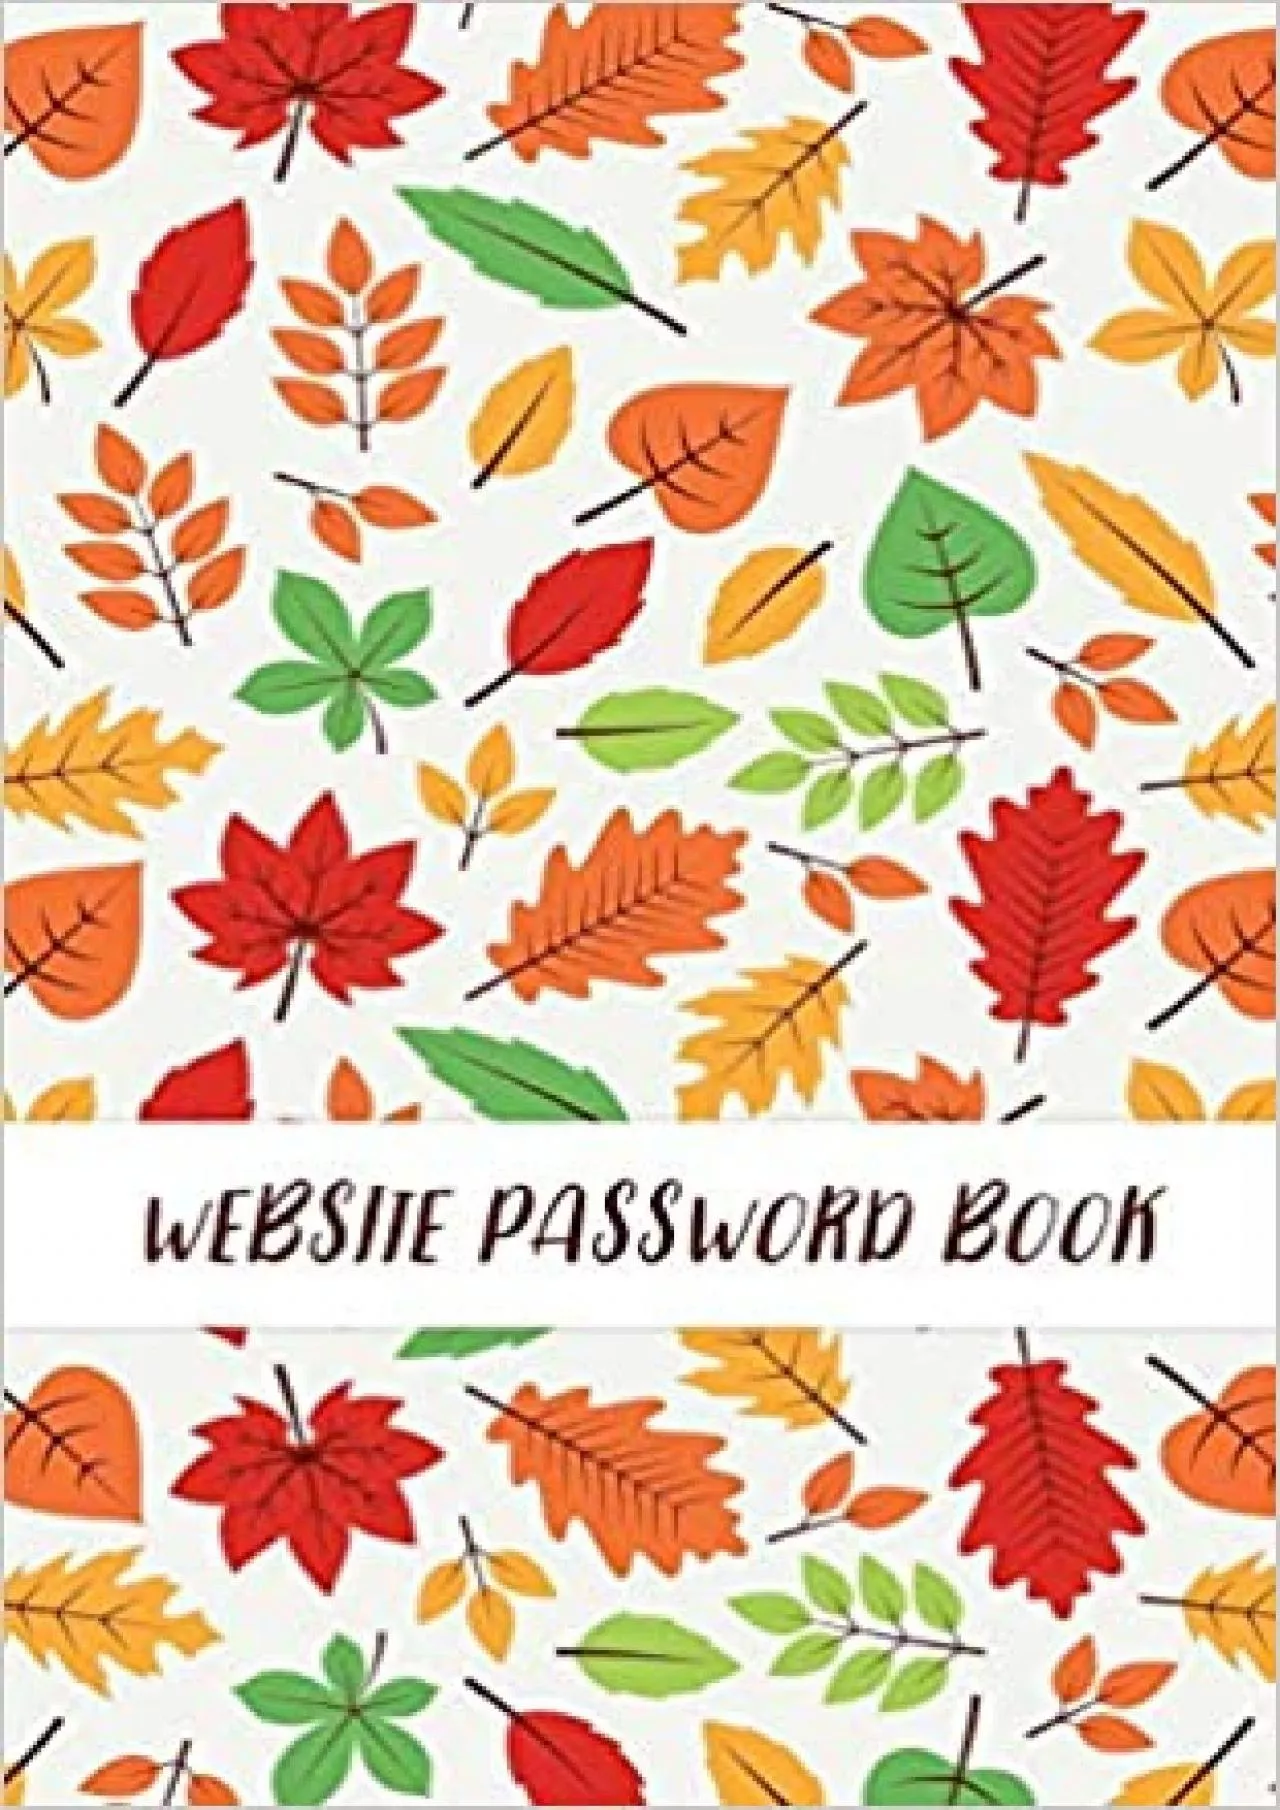 (DOWNLOAD)-Website Password Book Password Organizer Record Book for Username & Password